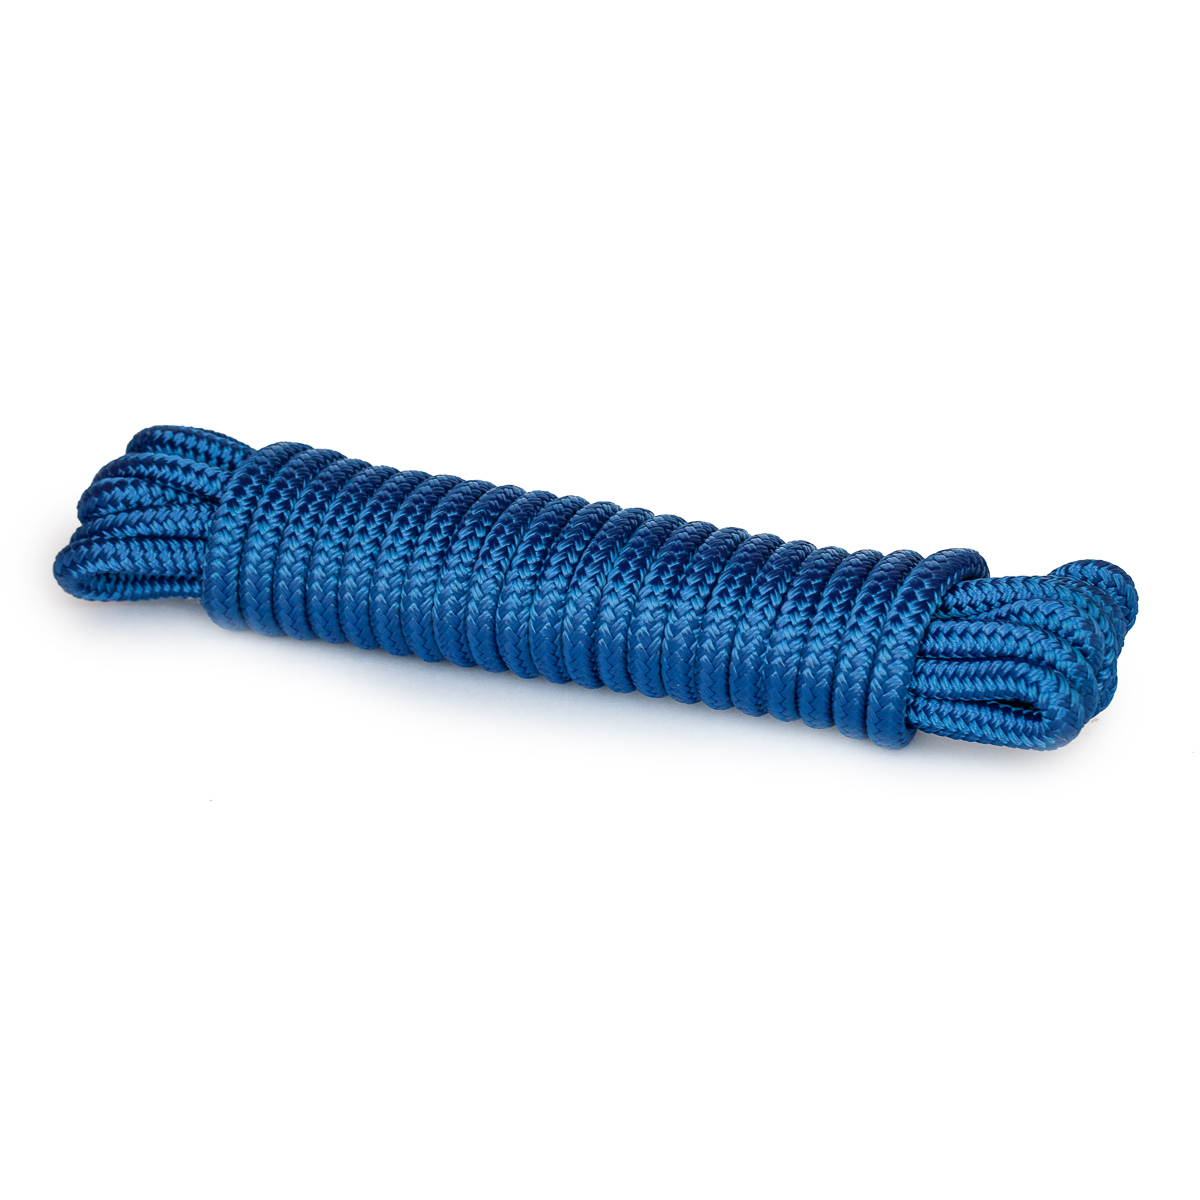 Шнур плетеный швартовый (Петроканат) 12 мм, 9 м, синий